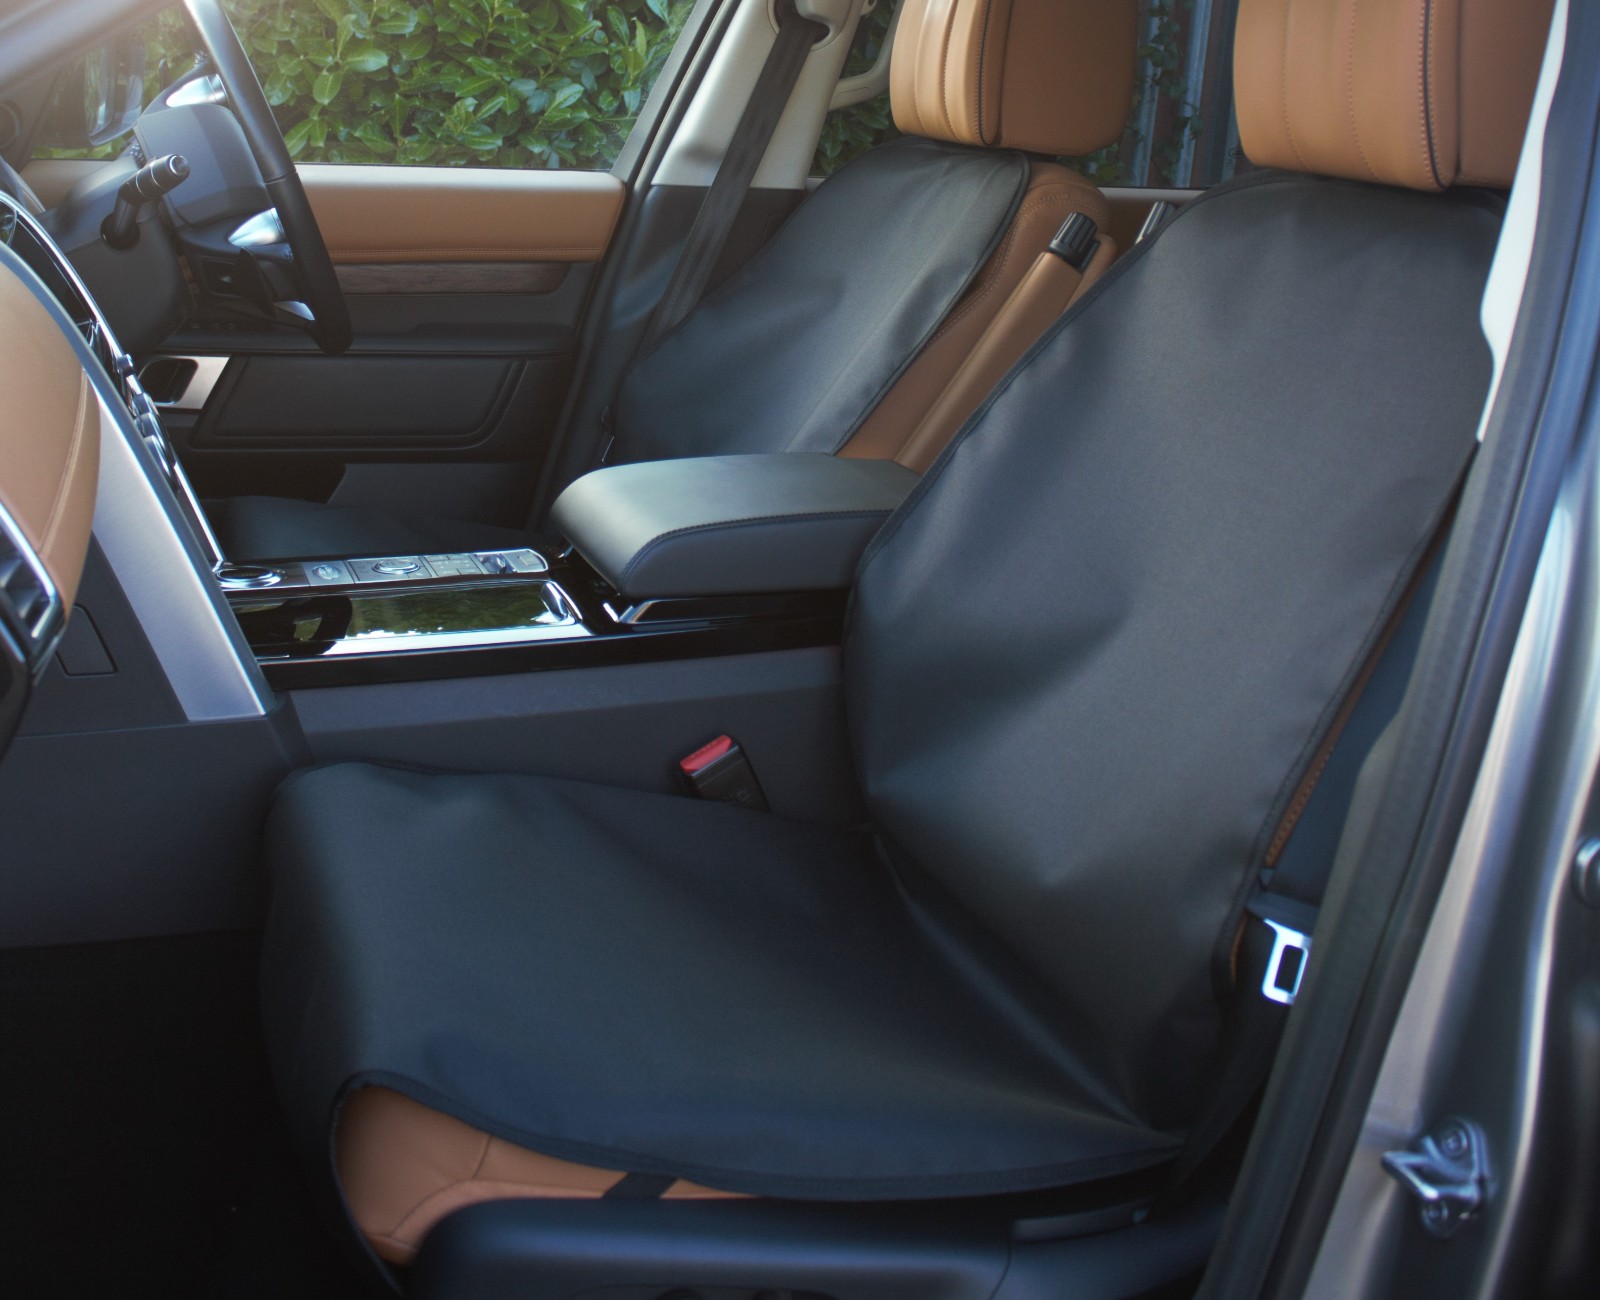 US 2 x Range Rover Evoque Velar Seat-belt Covers Shoulder Pads Cushion